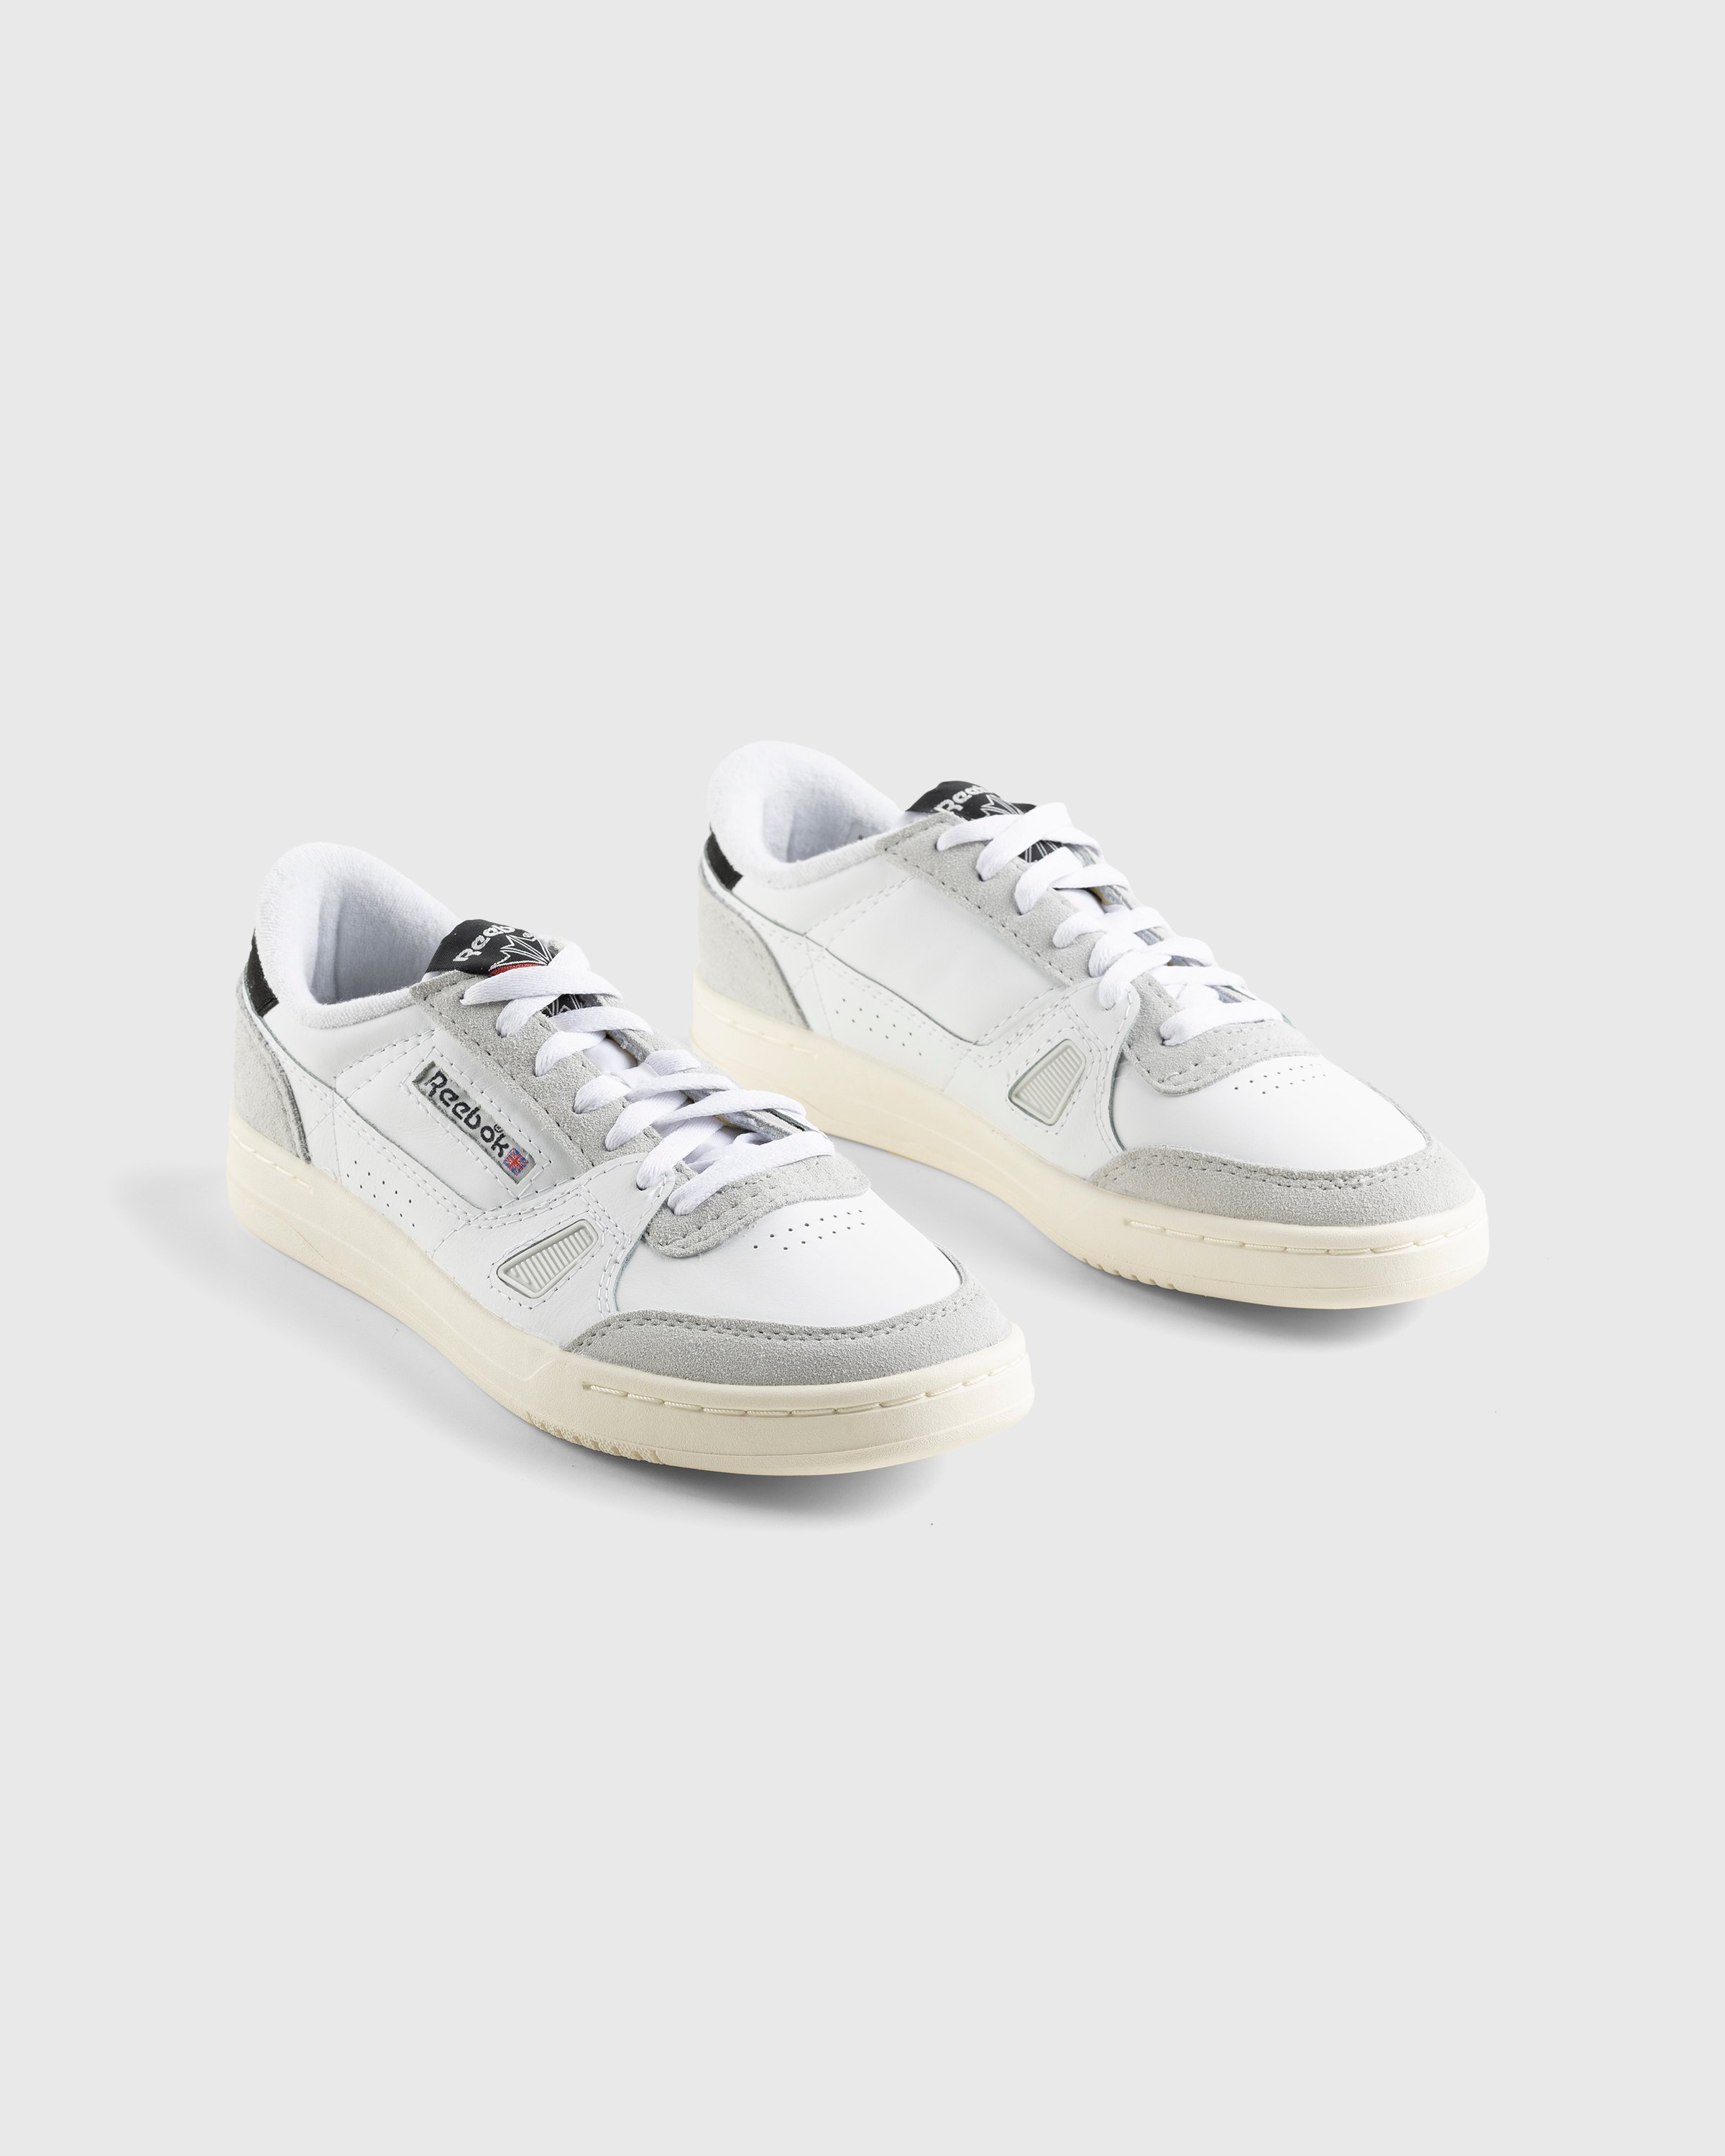 Reebok - LT Court - Footwear - White - Image 3